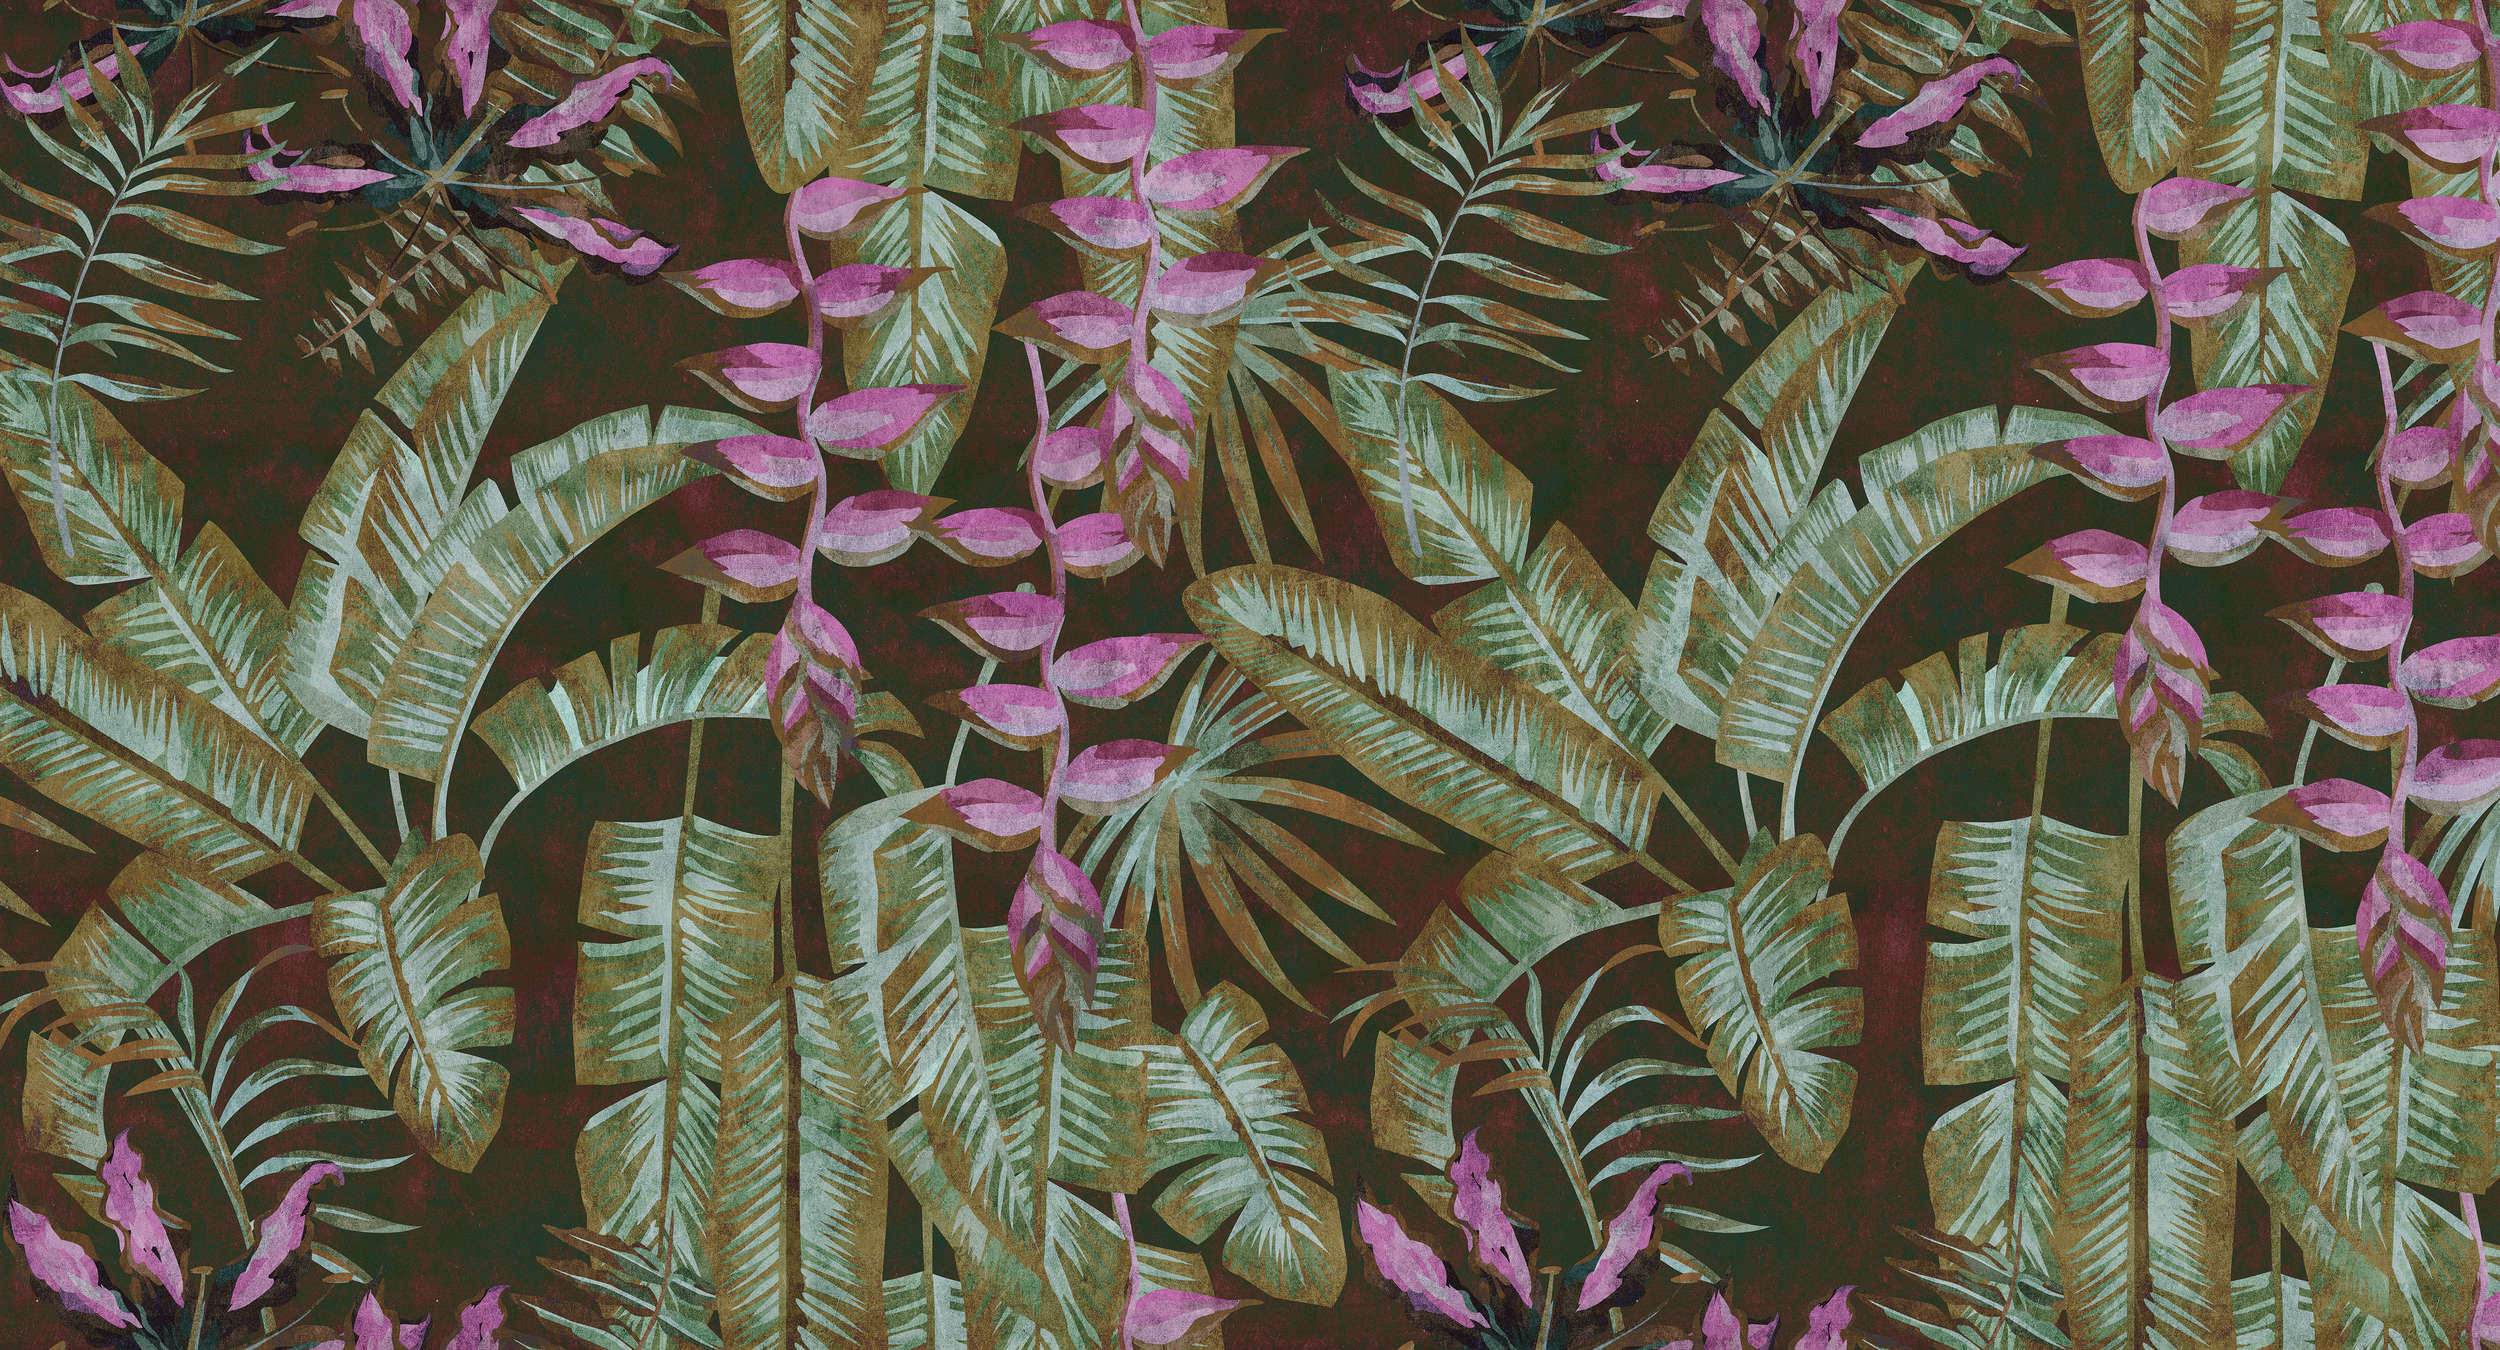             Tropicana 1 - Jungle Wallpaper with Banana Leaves&Farms Blotting Paper Structure - Green, Purple | Premium Smooth Non-woven
        